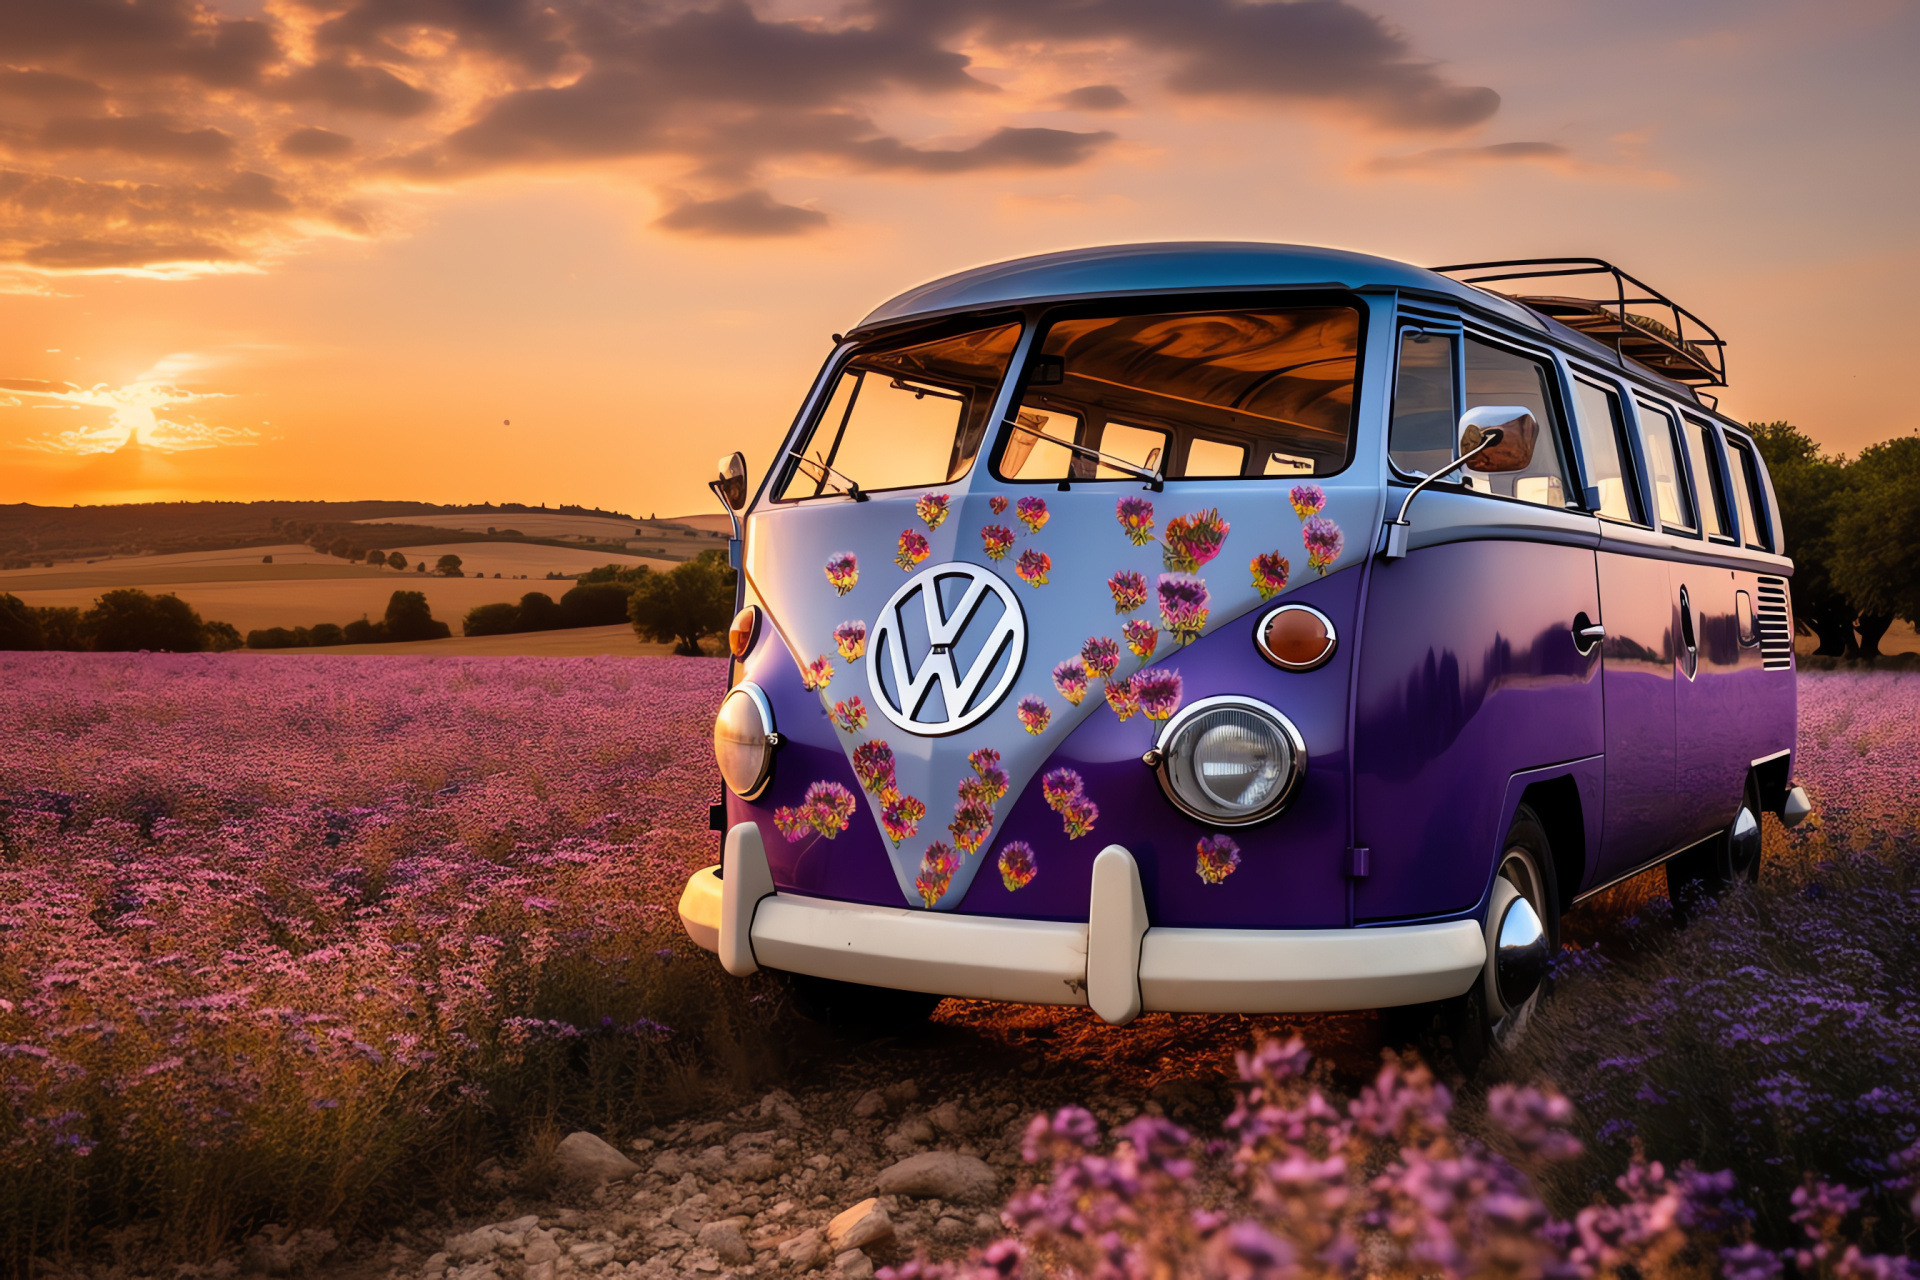 VW Bus amidst Provencal flora, iconic paintwork, fragrant lavender fields, boho vehicle vibe, sunlit rural freshness, HD Desktop Image